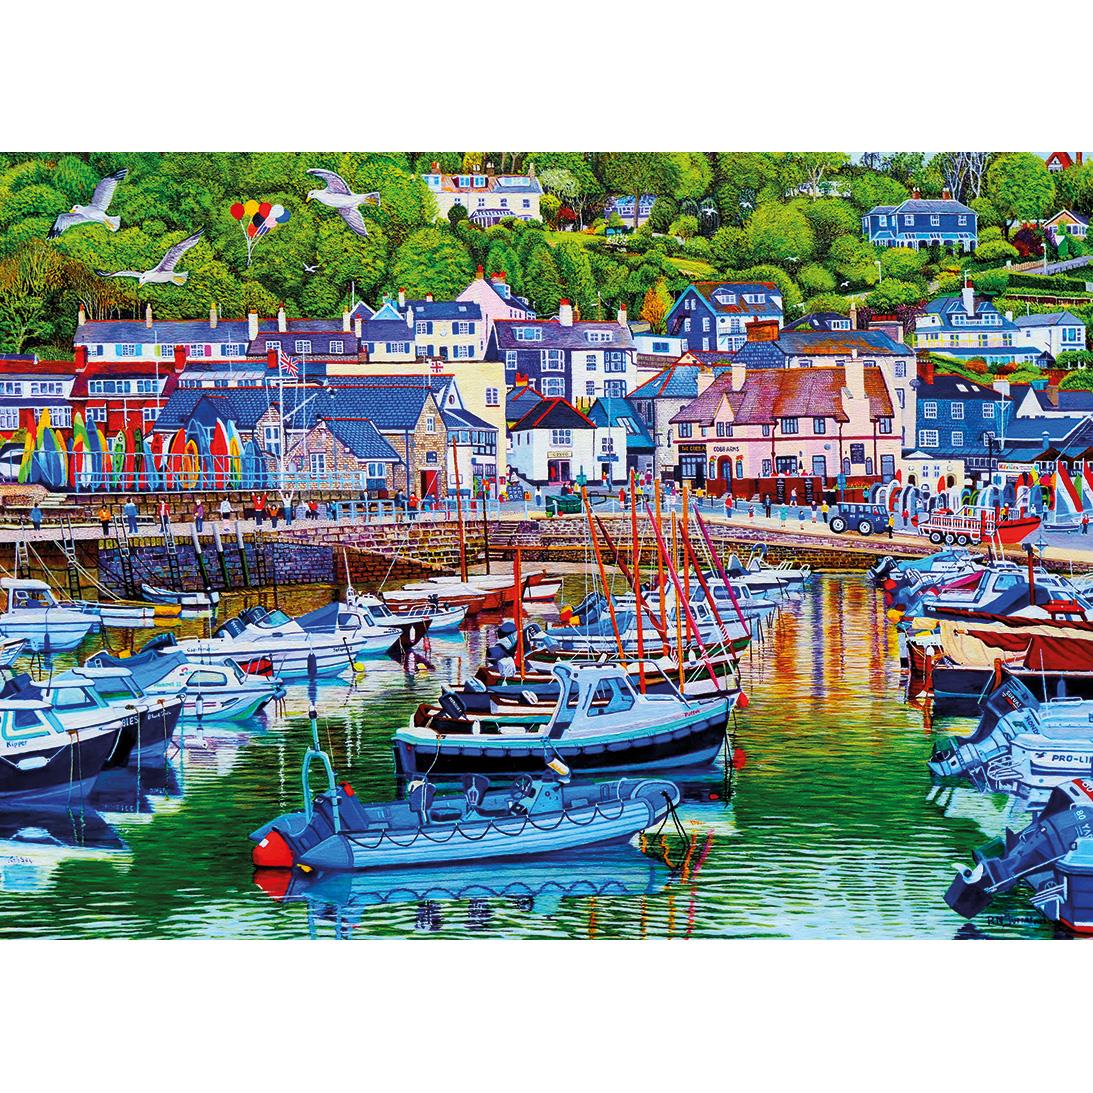 Gibsons Lyme Regis Harbour Jigsaw Puzzle (1000 Pieces)